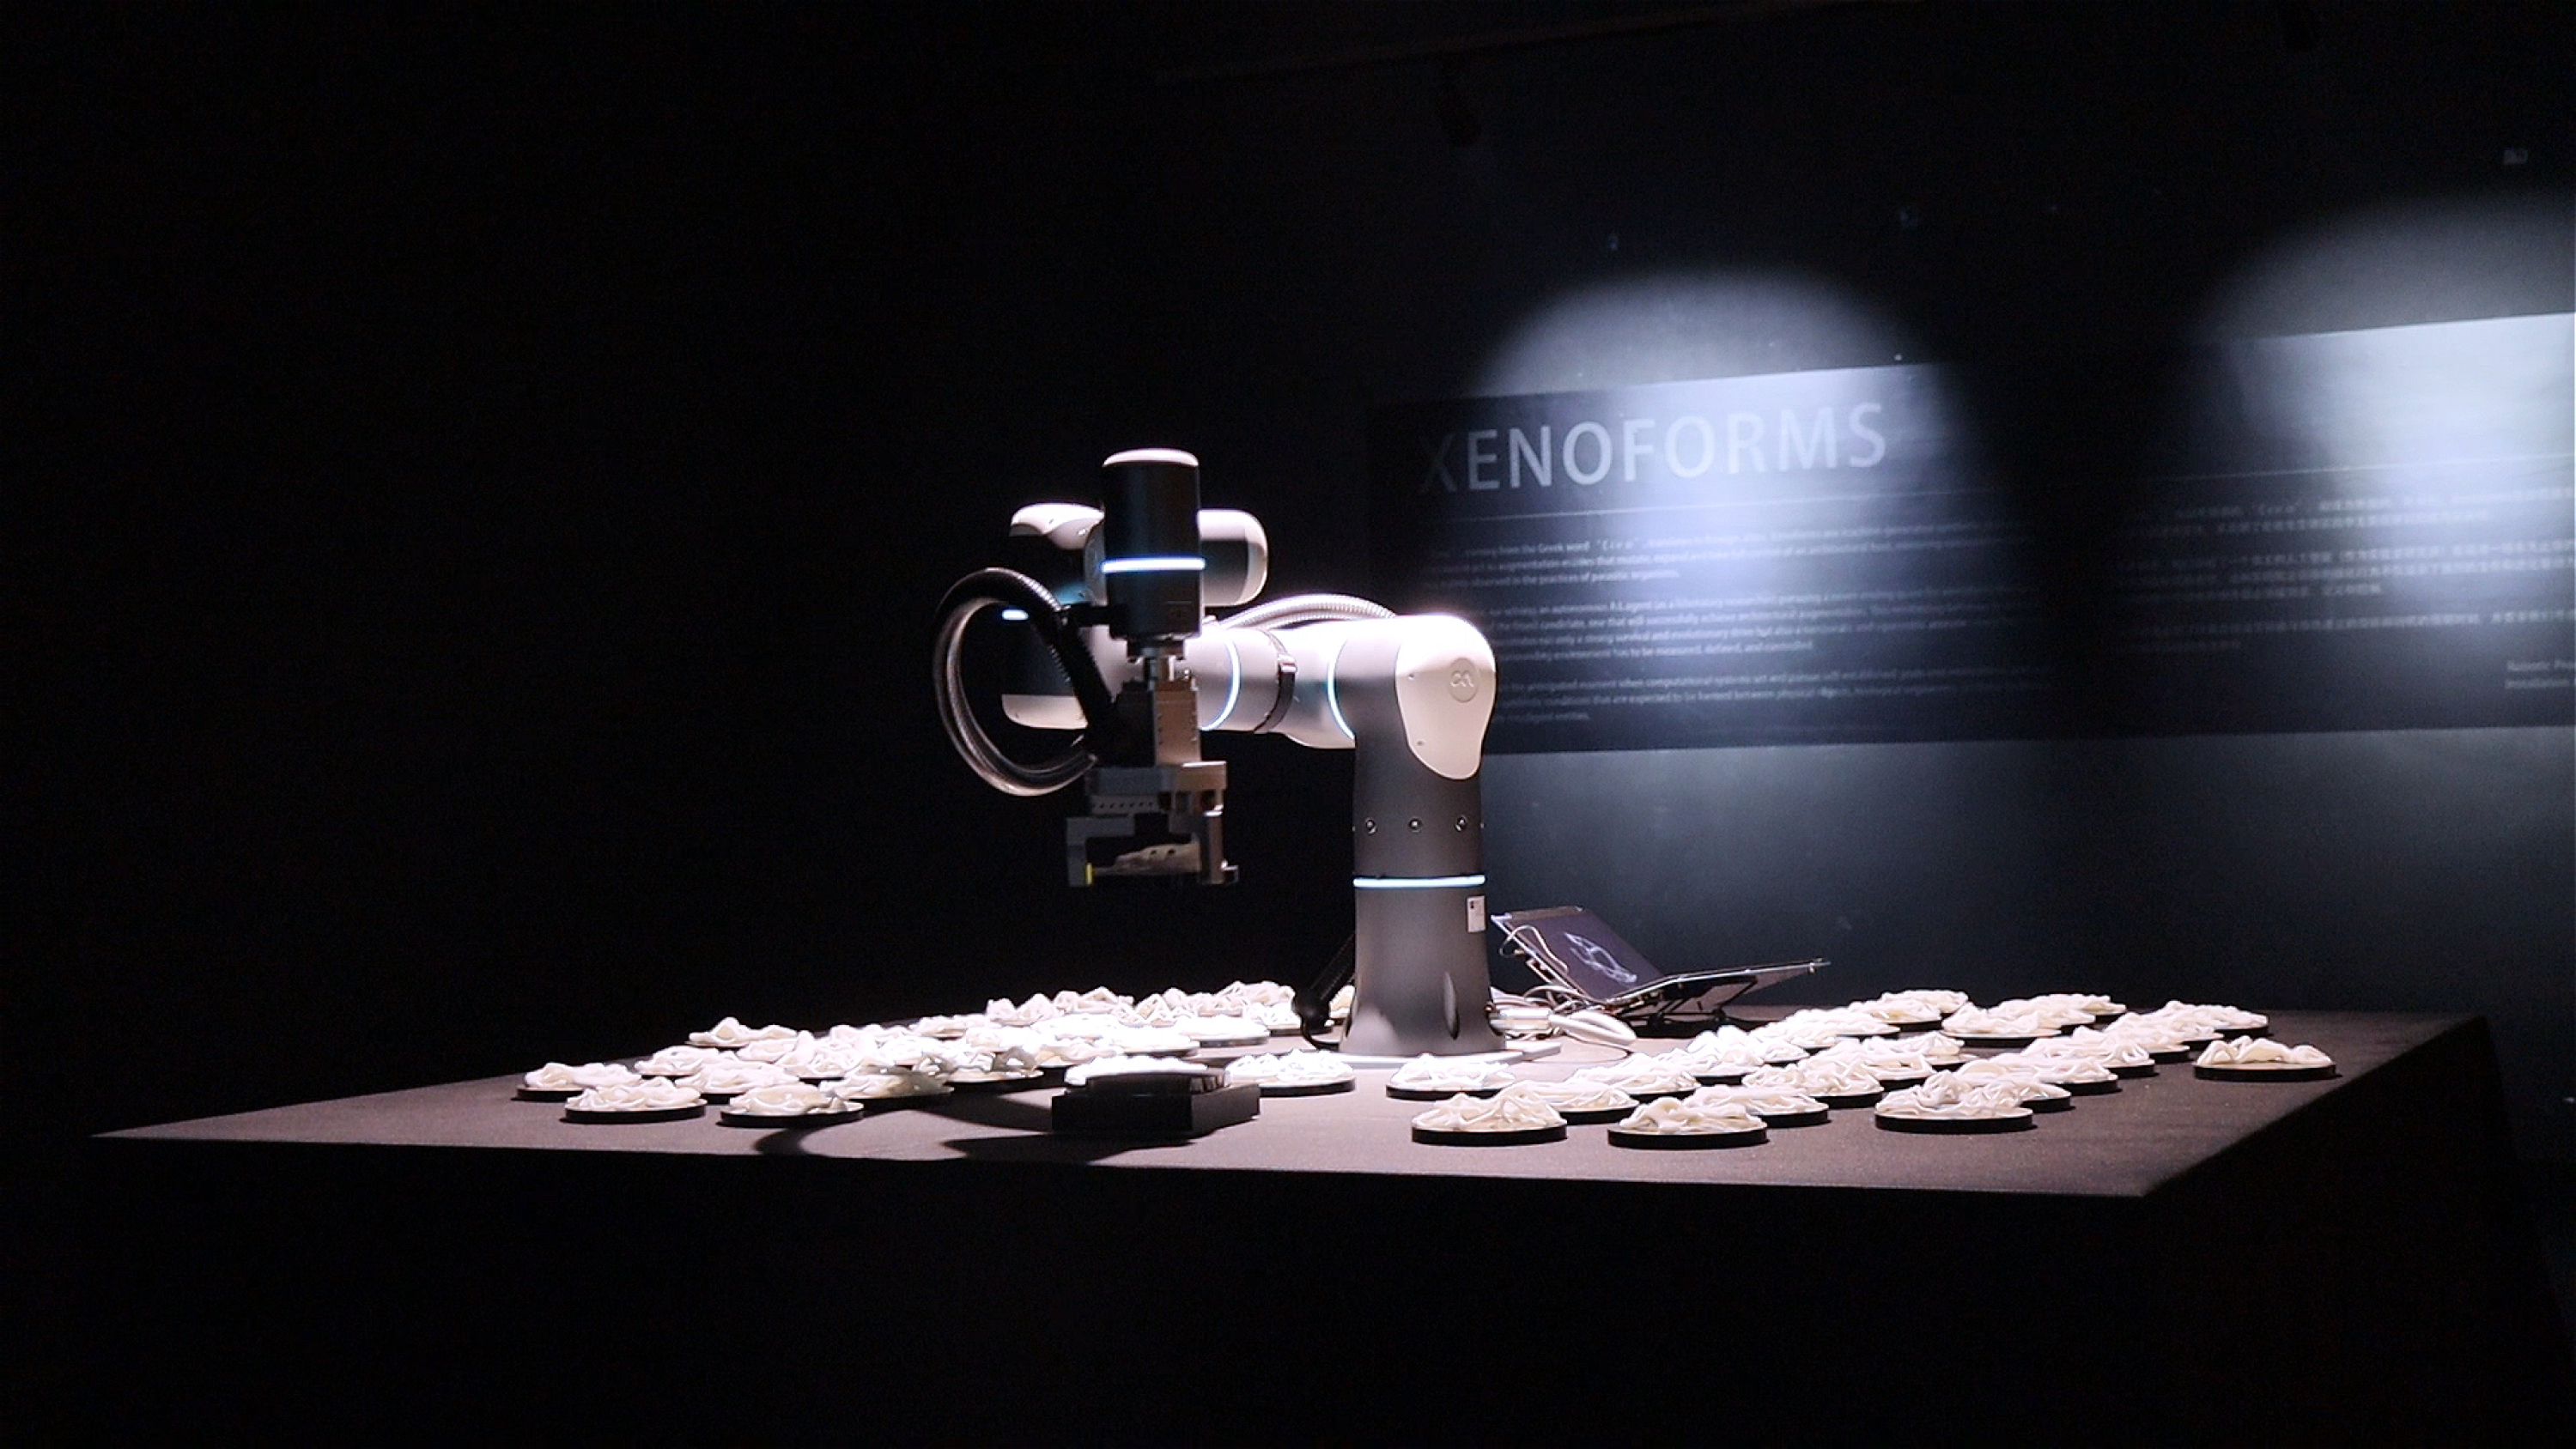 Flexiv's Rizon Robot Used in Avant-Garde Art Installation